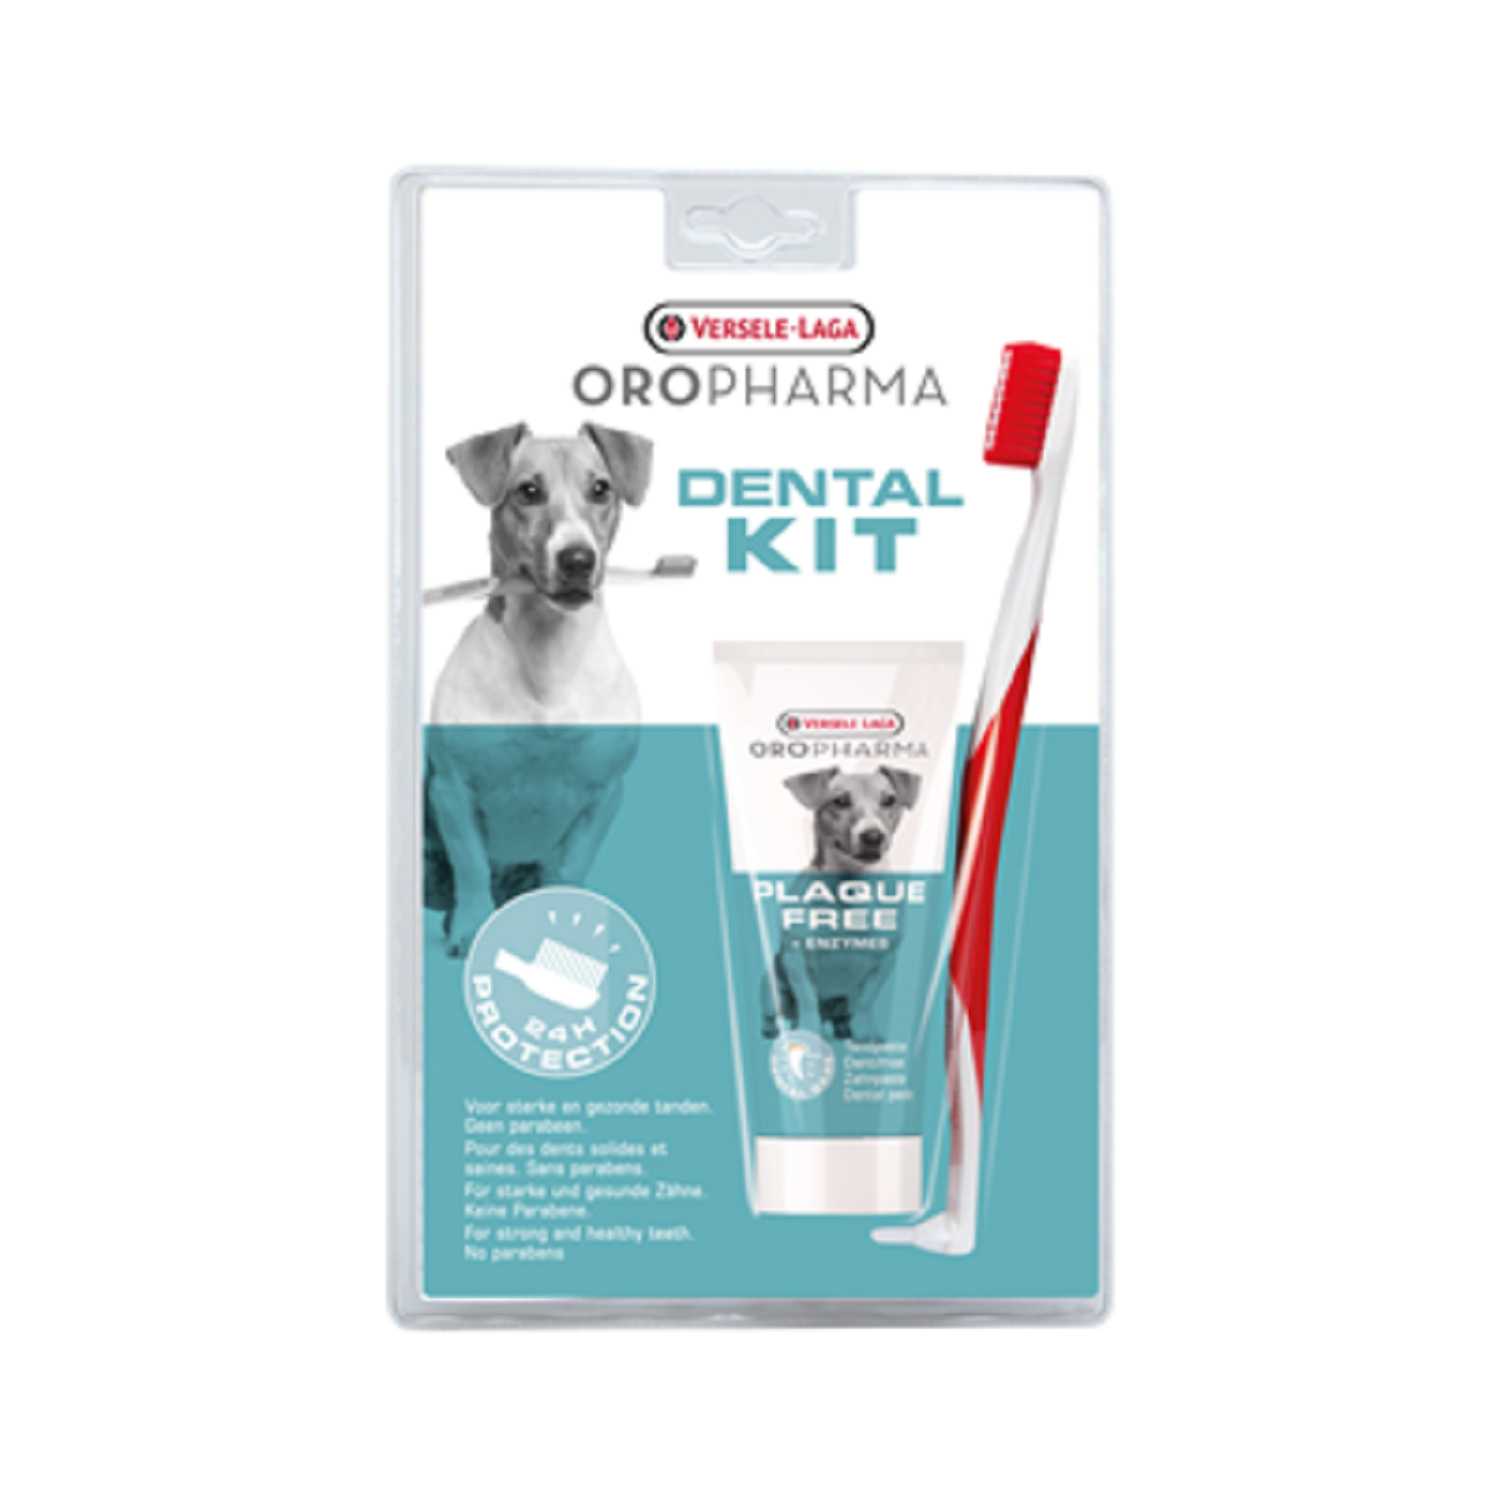 Oropharma plaque free dental kit